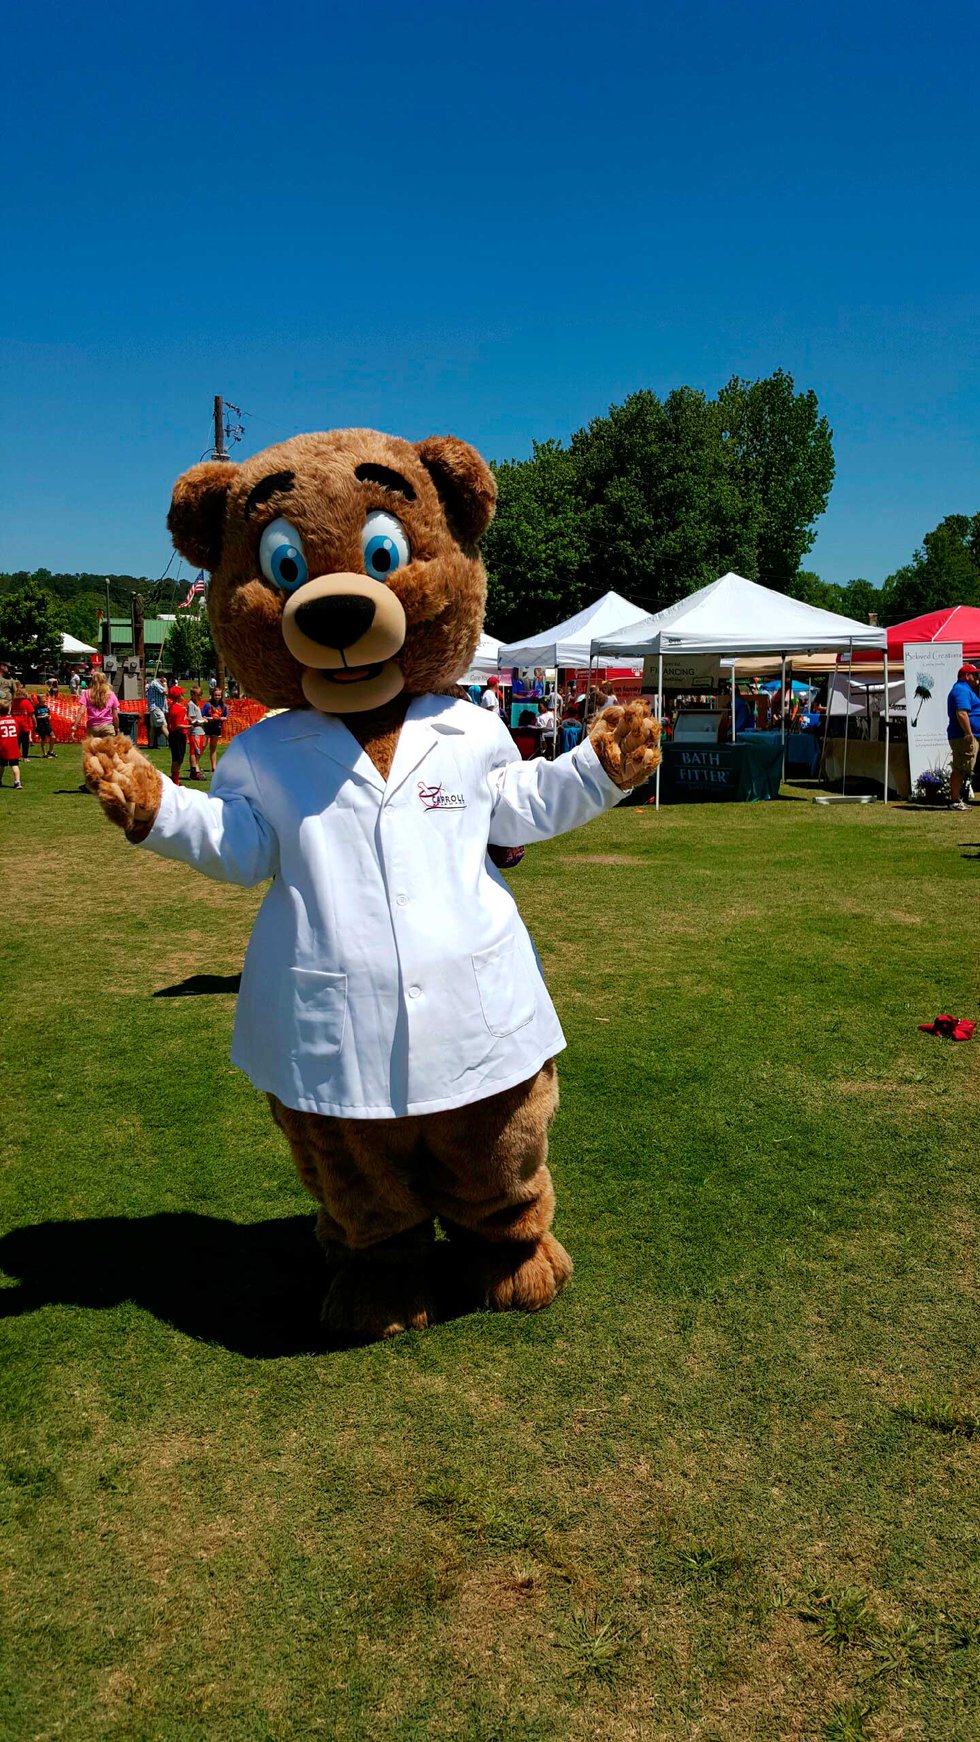 The Carroll Pharmacy Caring Bear mascot